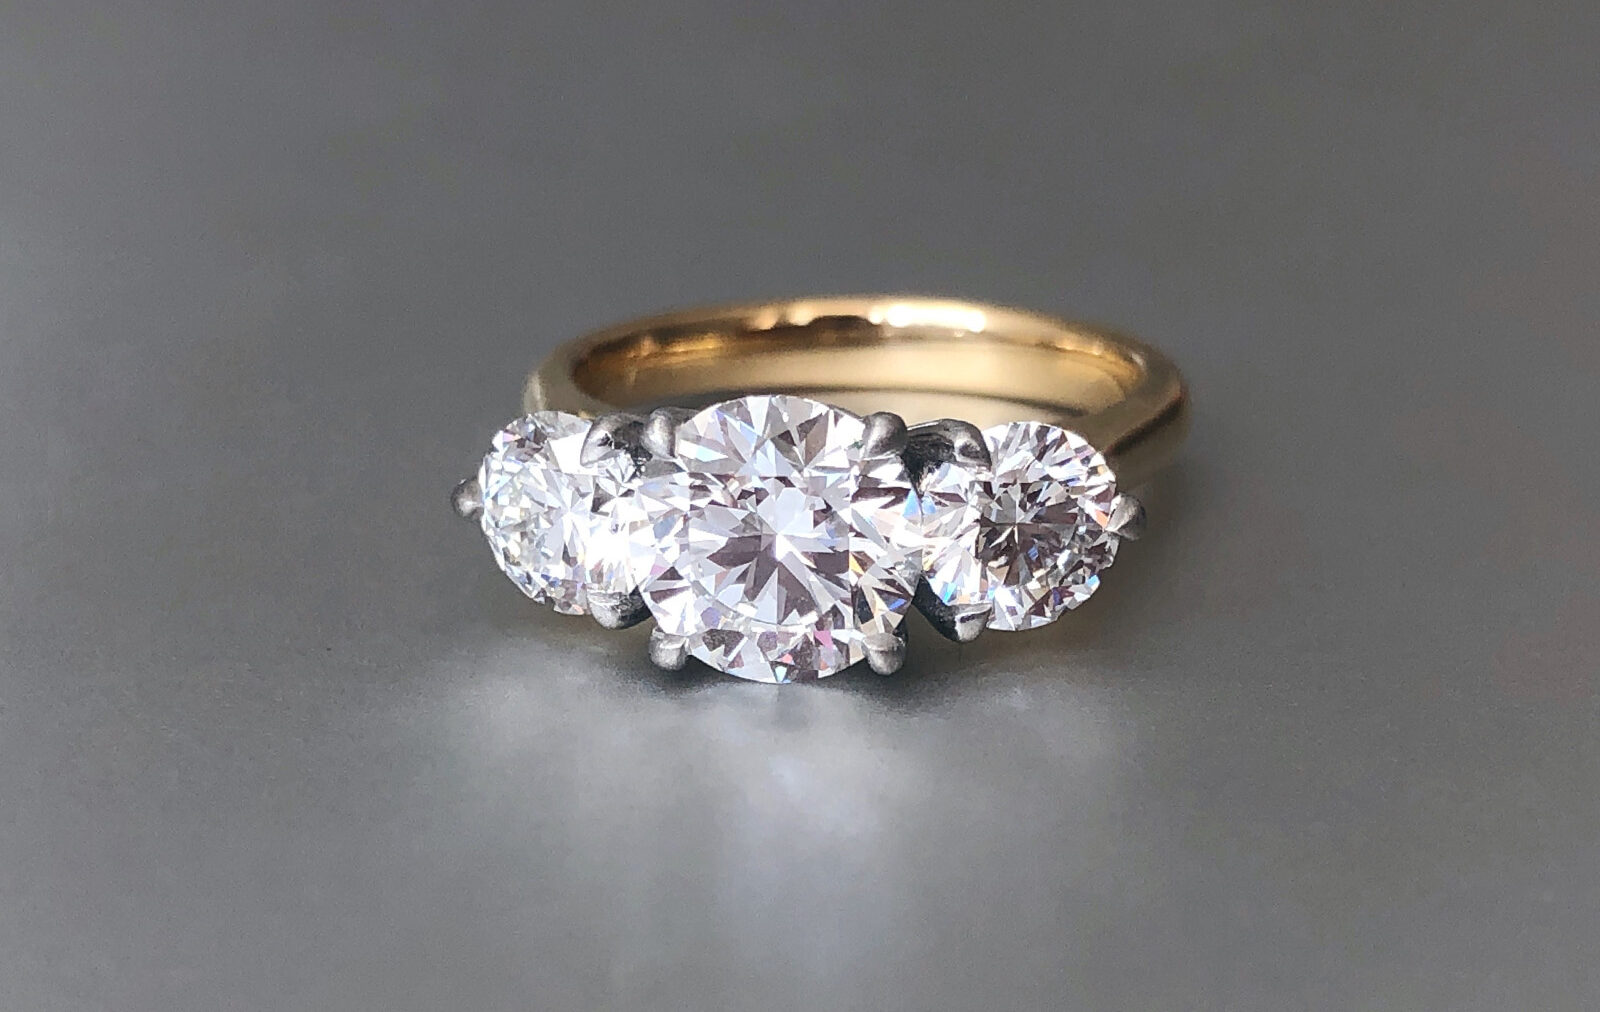 Lab created diamond, platinum and gold ring